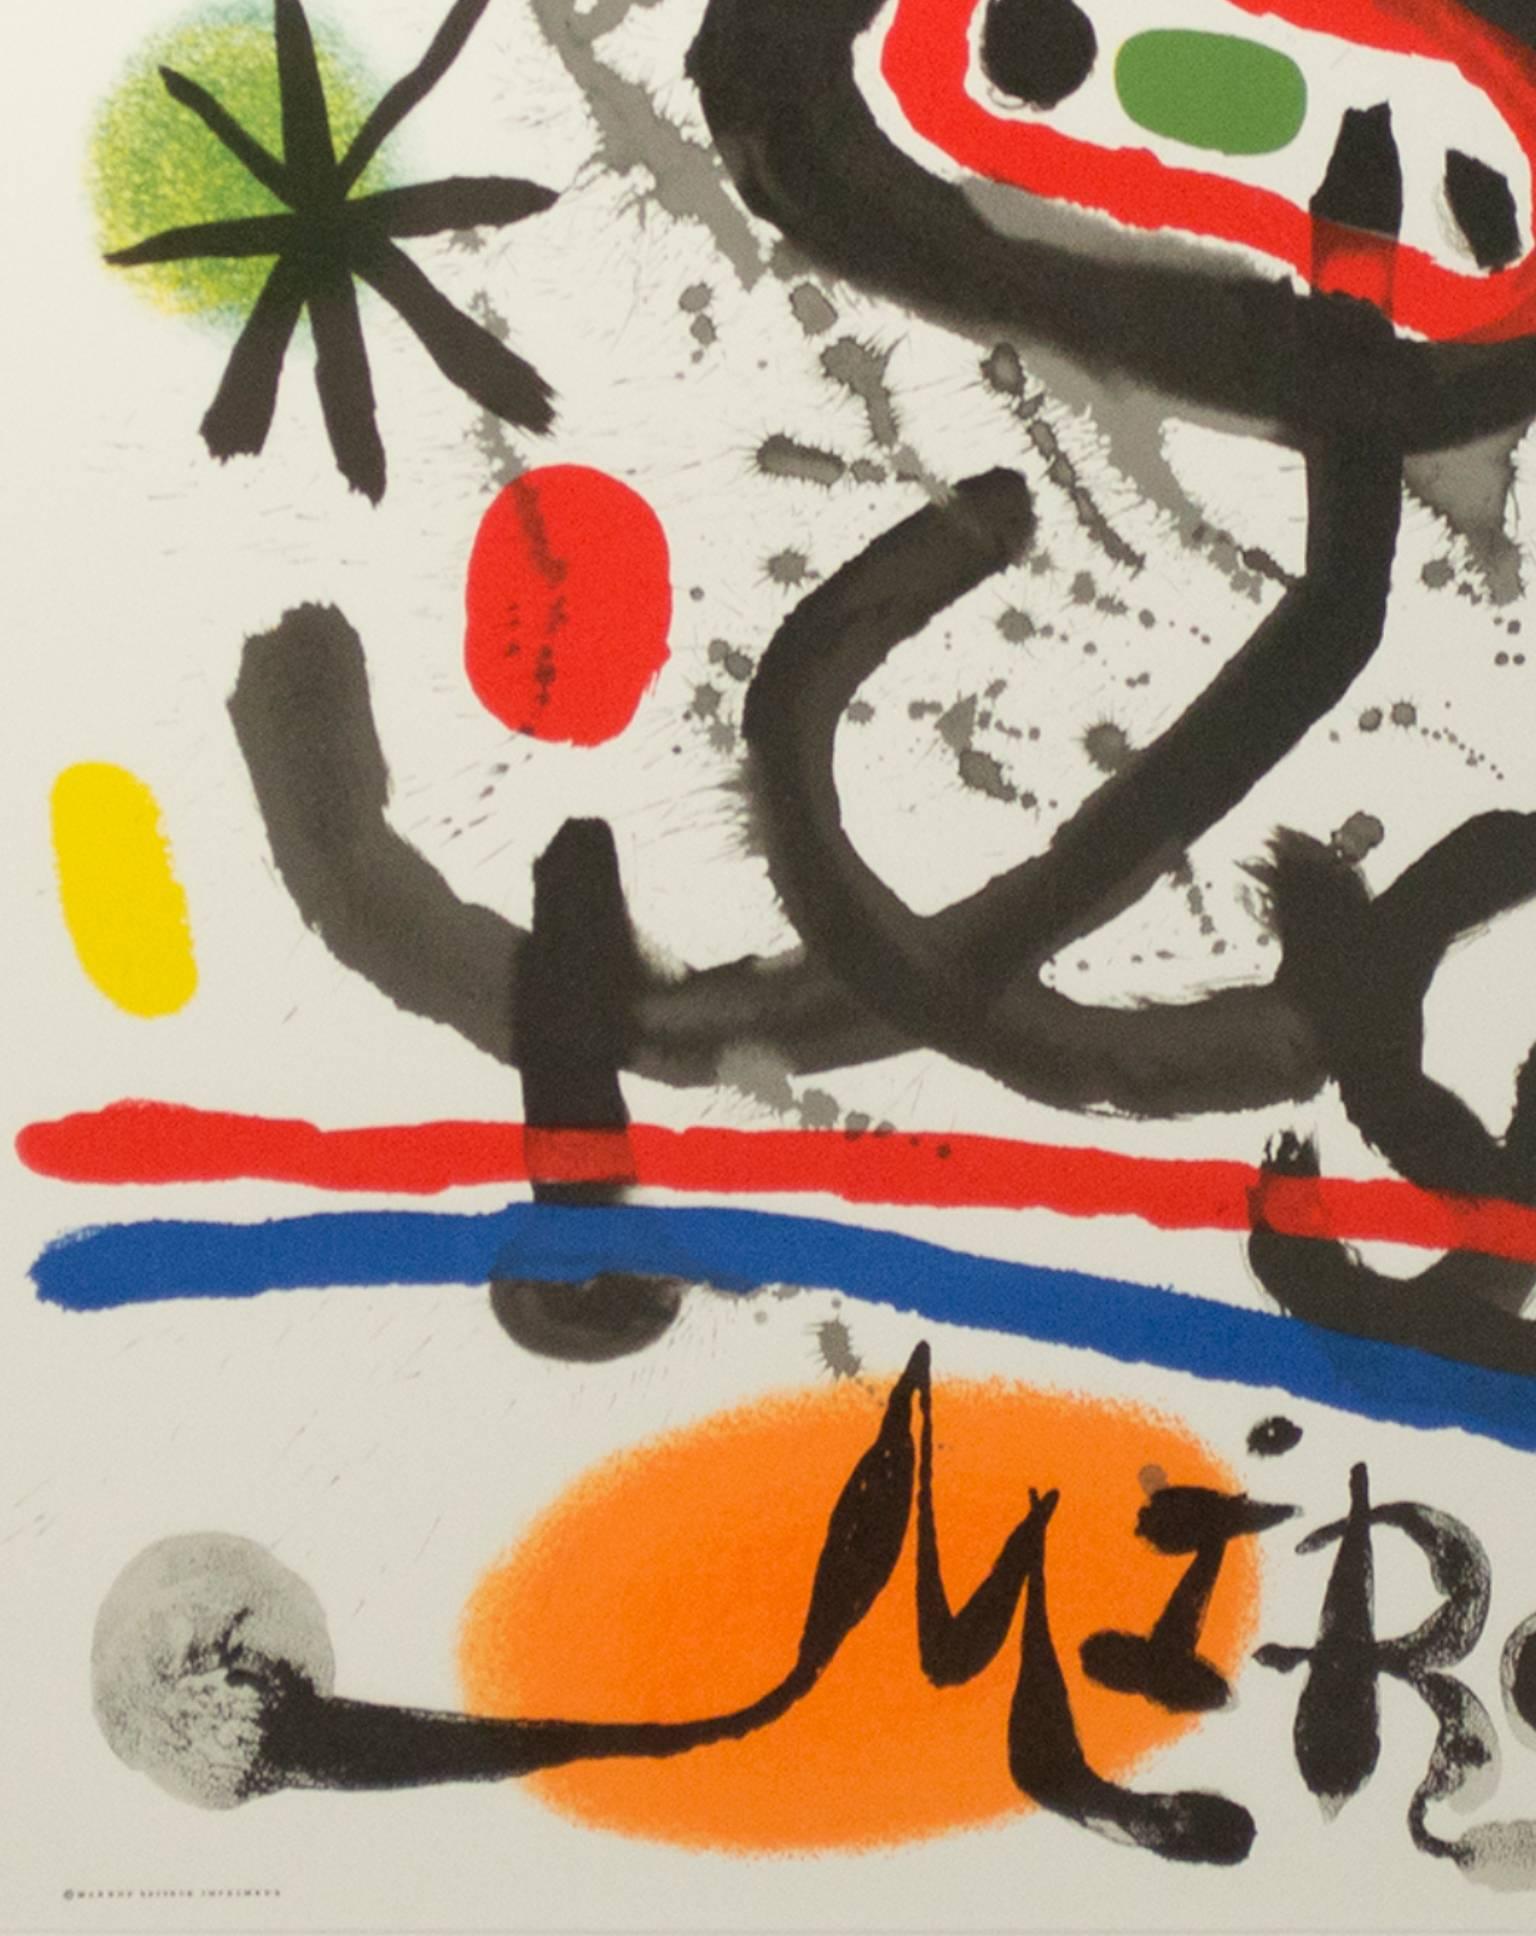 « Galerie Maeght Miro Maqght Editeur Imprimeur », une lithographie originale de Joan Miro - Print de Joan Miró